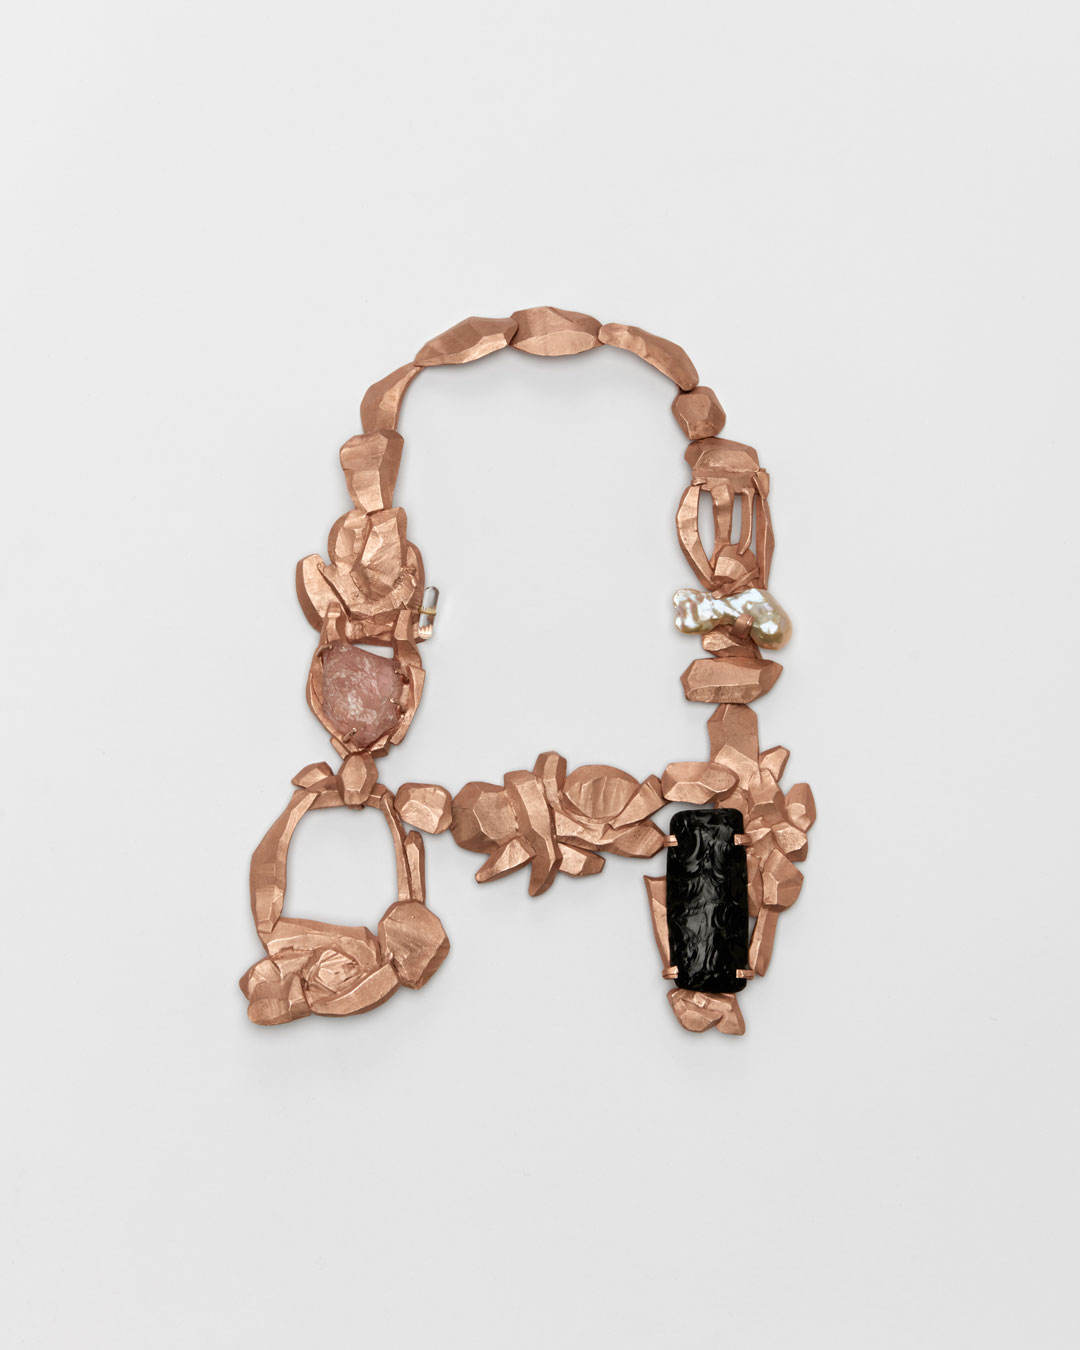 Iris Bodemer, Notizen (Notes), 2019, halssieraad; brons, obsidiaan, parel, rozenkwarts, bergkristal, 300 x 230 x 20 mm, €7750